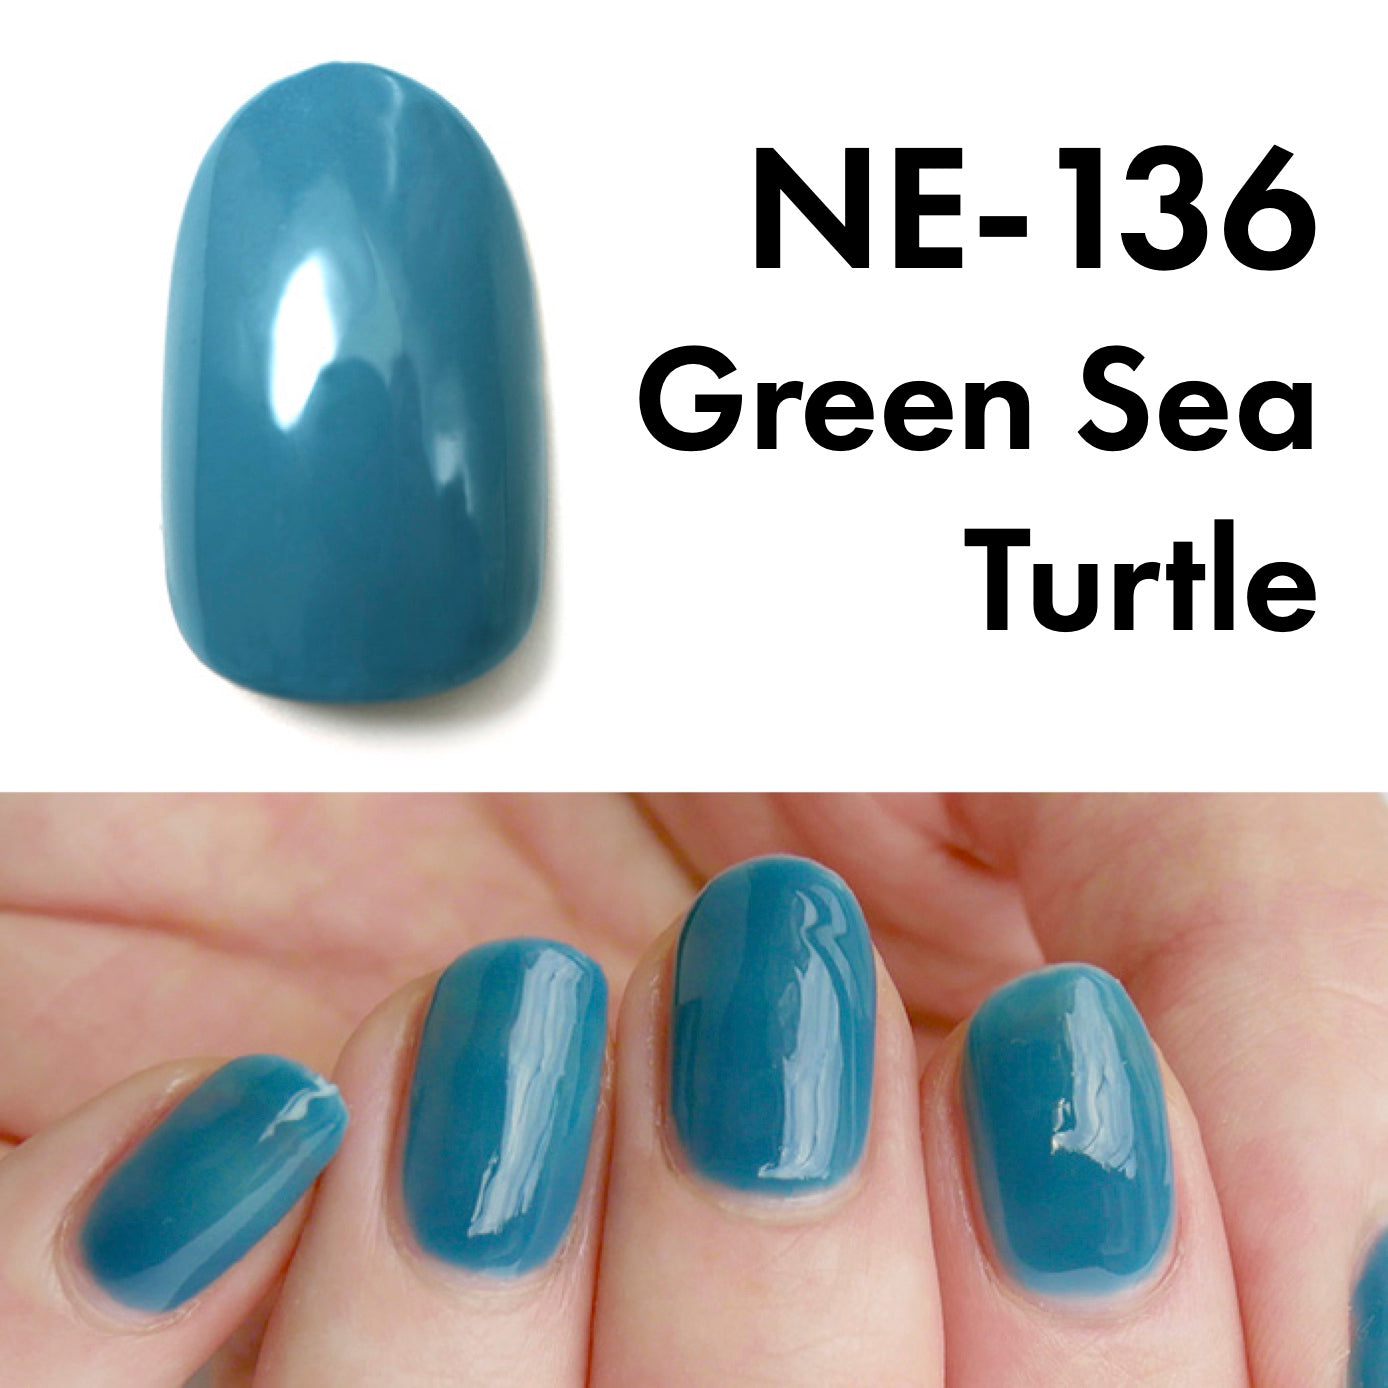 Gel Polish NE-136 "Green Sea Turtle"